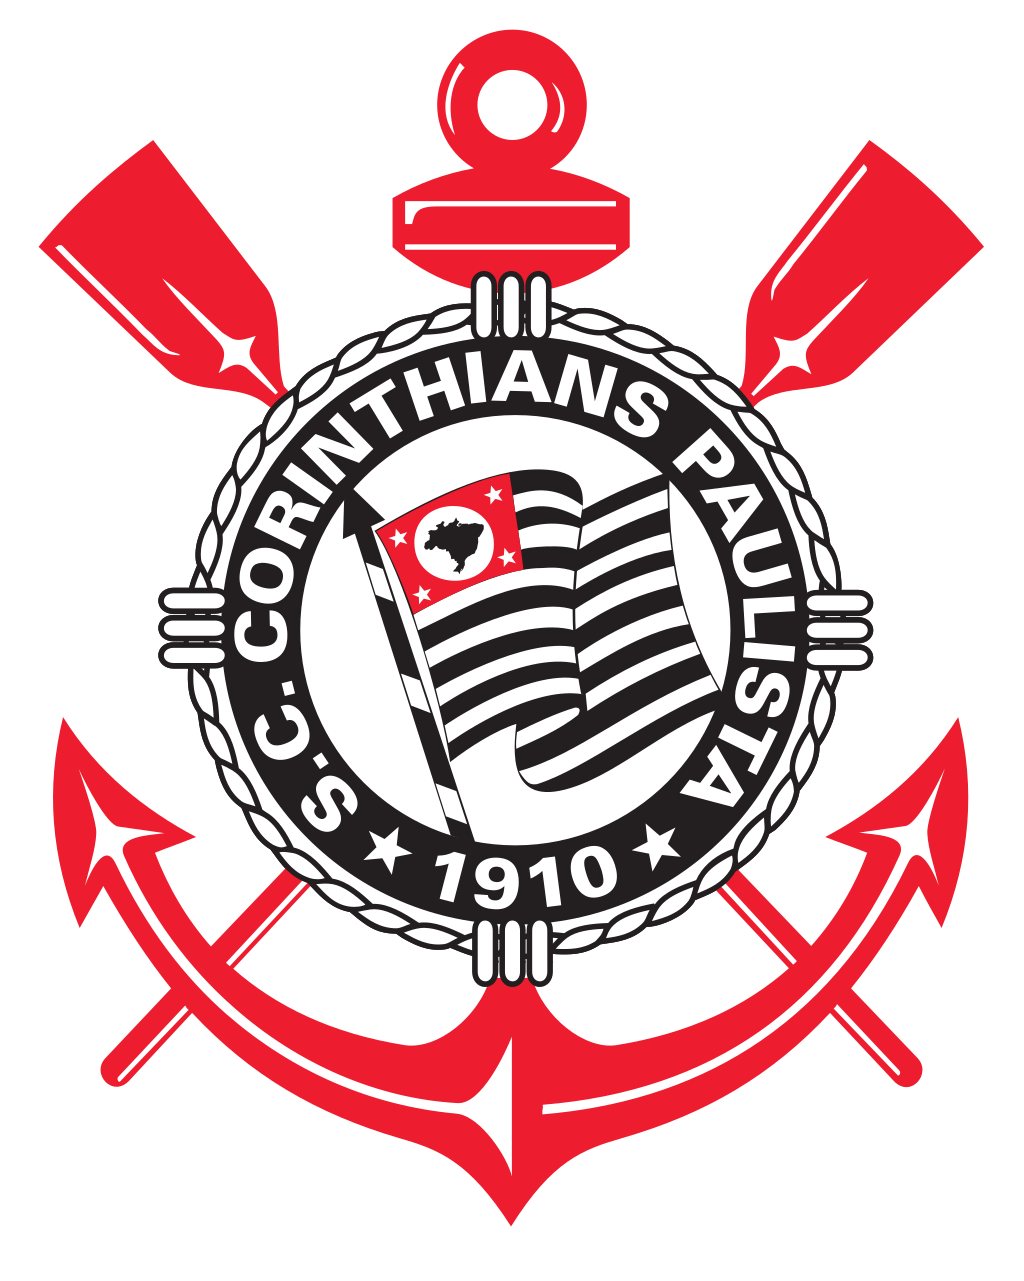 Logo Sport Club Corinthians Paulista